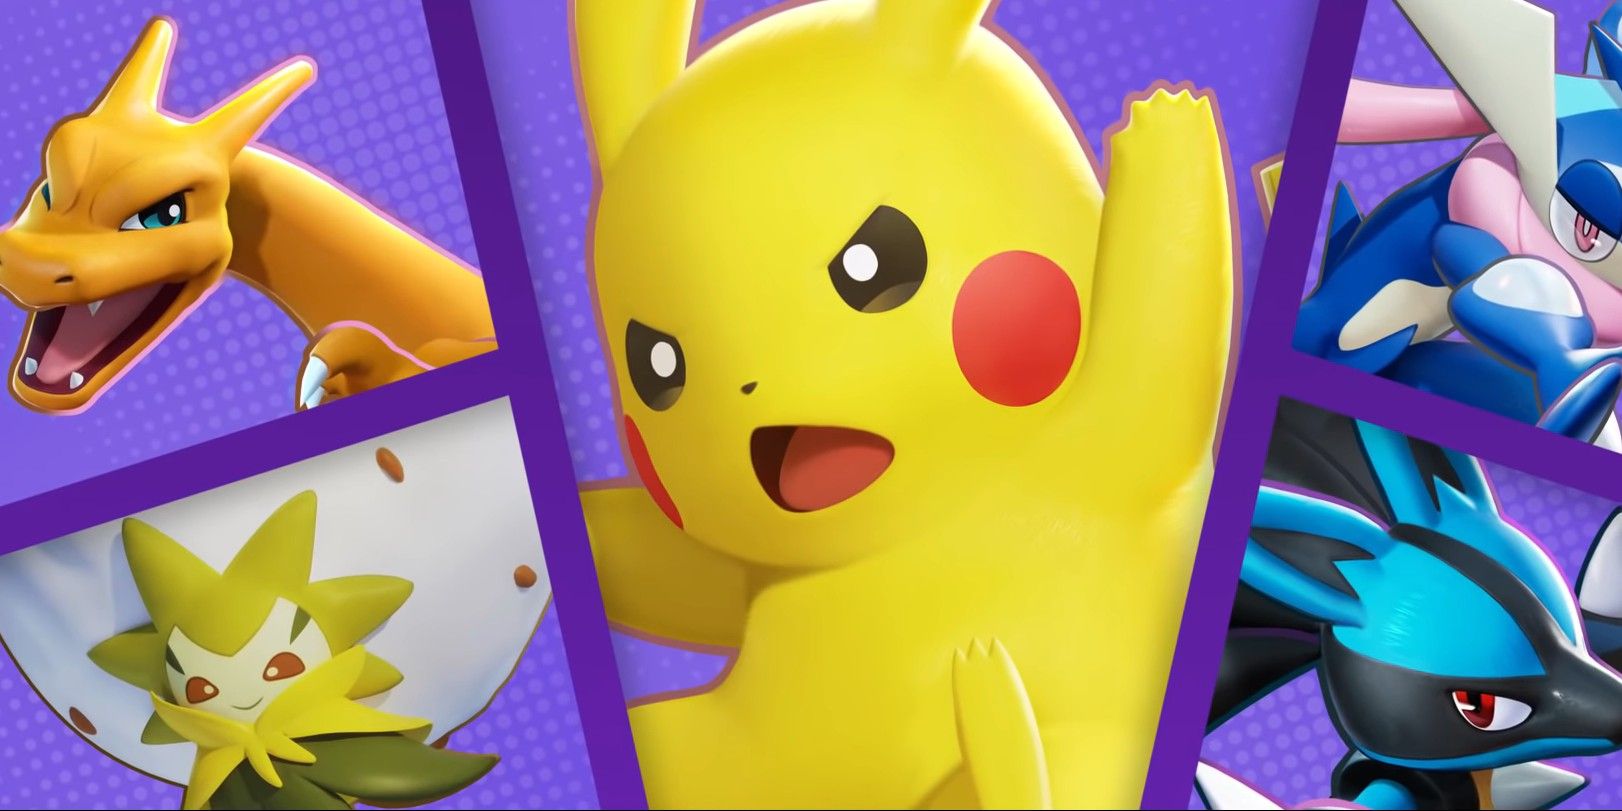 Pokemon Unite Trailer with Pikachu and Team